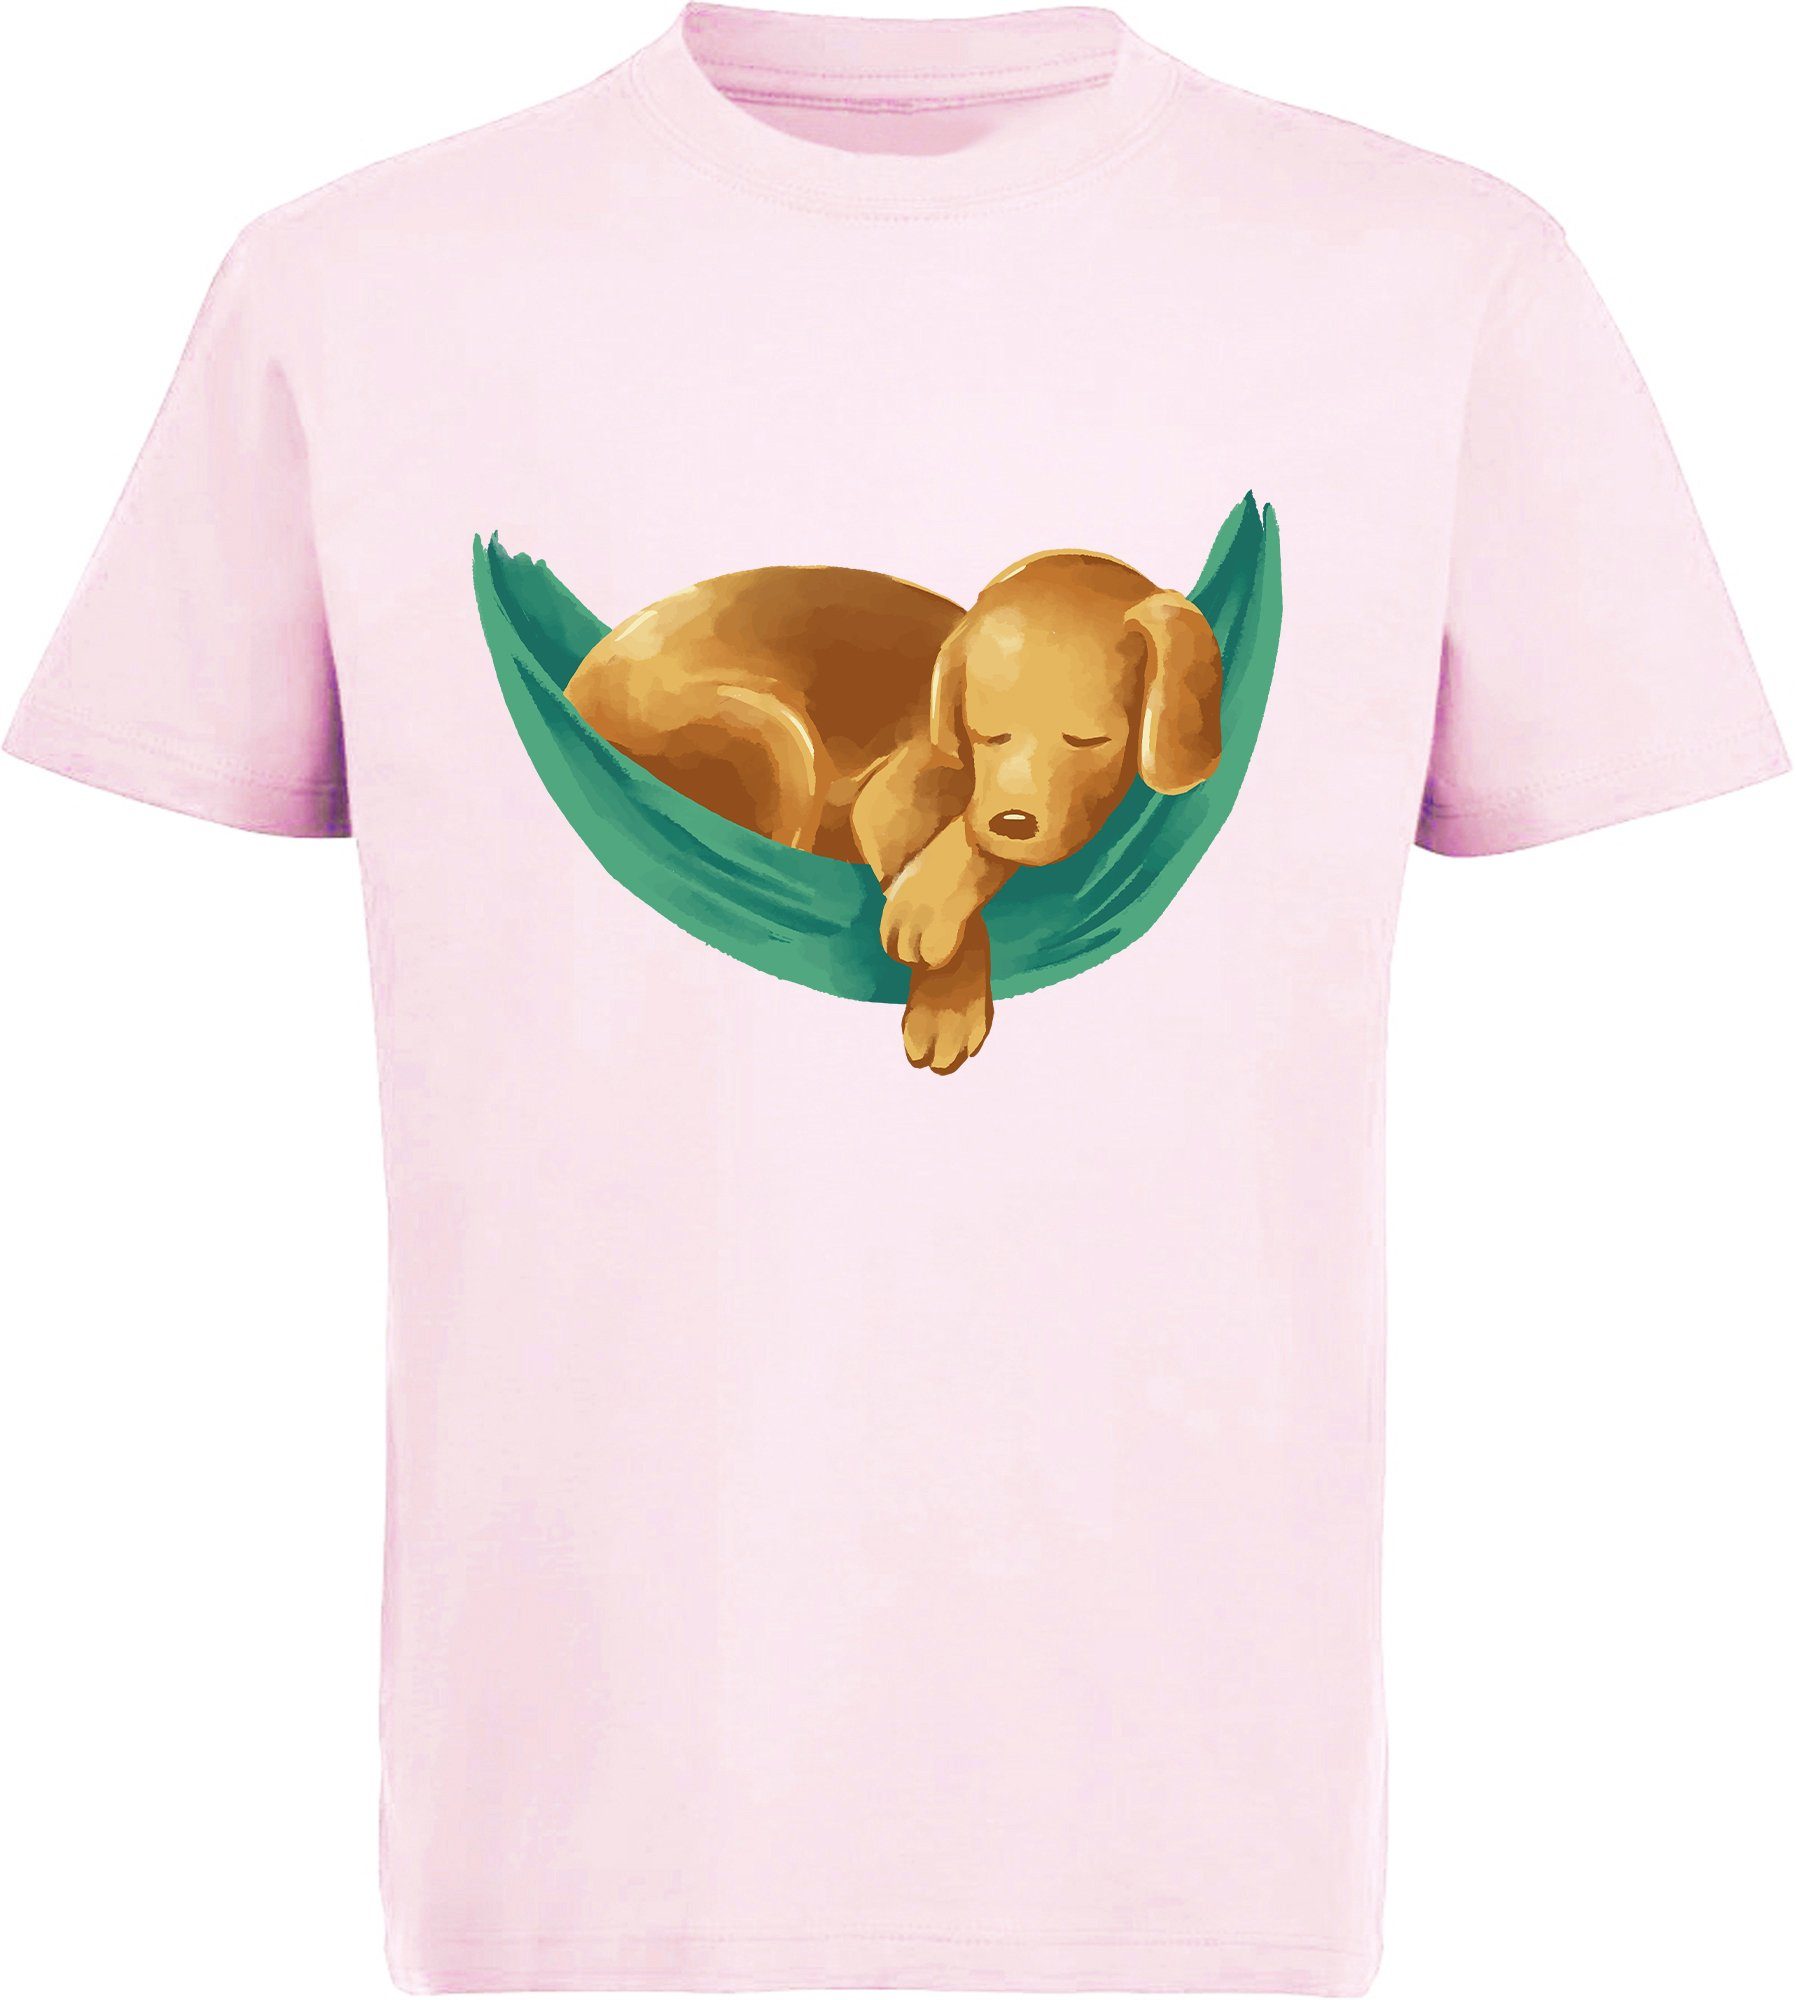 MyDesign24 T-Shirt Kinder Hunde Print Shirt bedruckt - Labrador Welpe in Hängematte Baumwollshirt mit Aufdruck, i245 rosa | T-Shirts